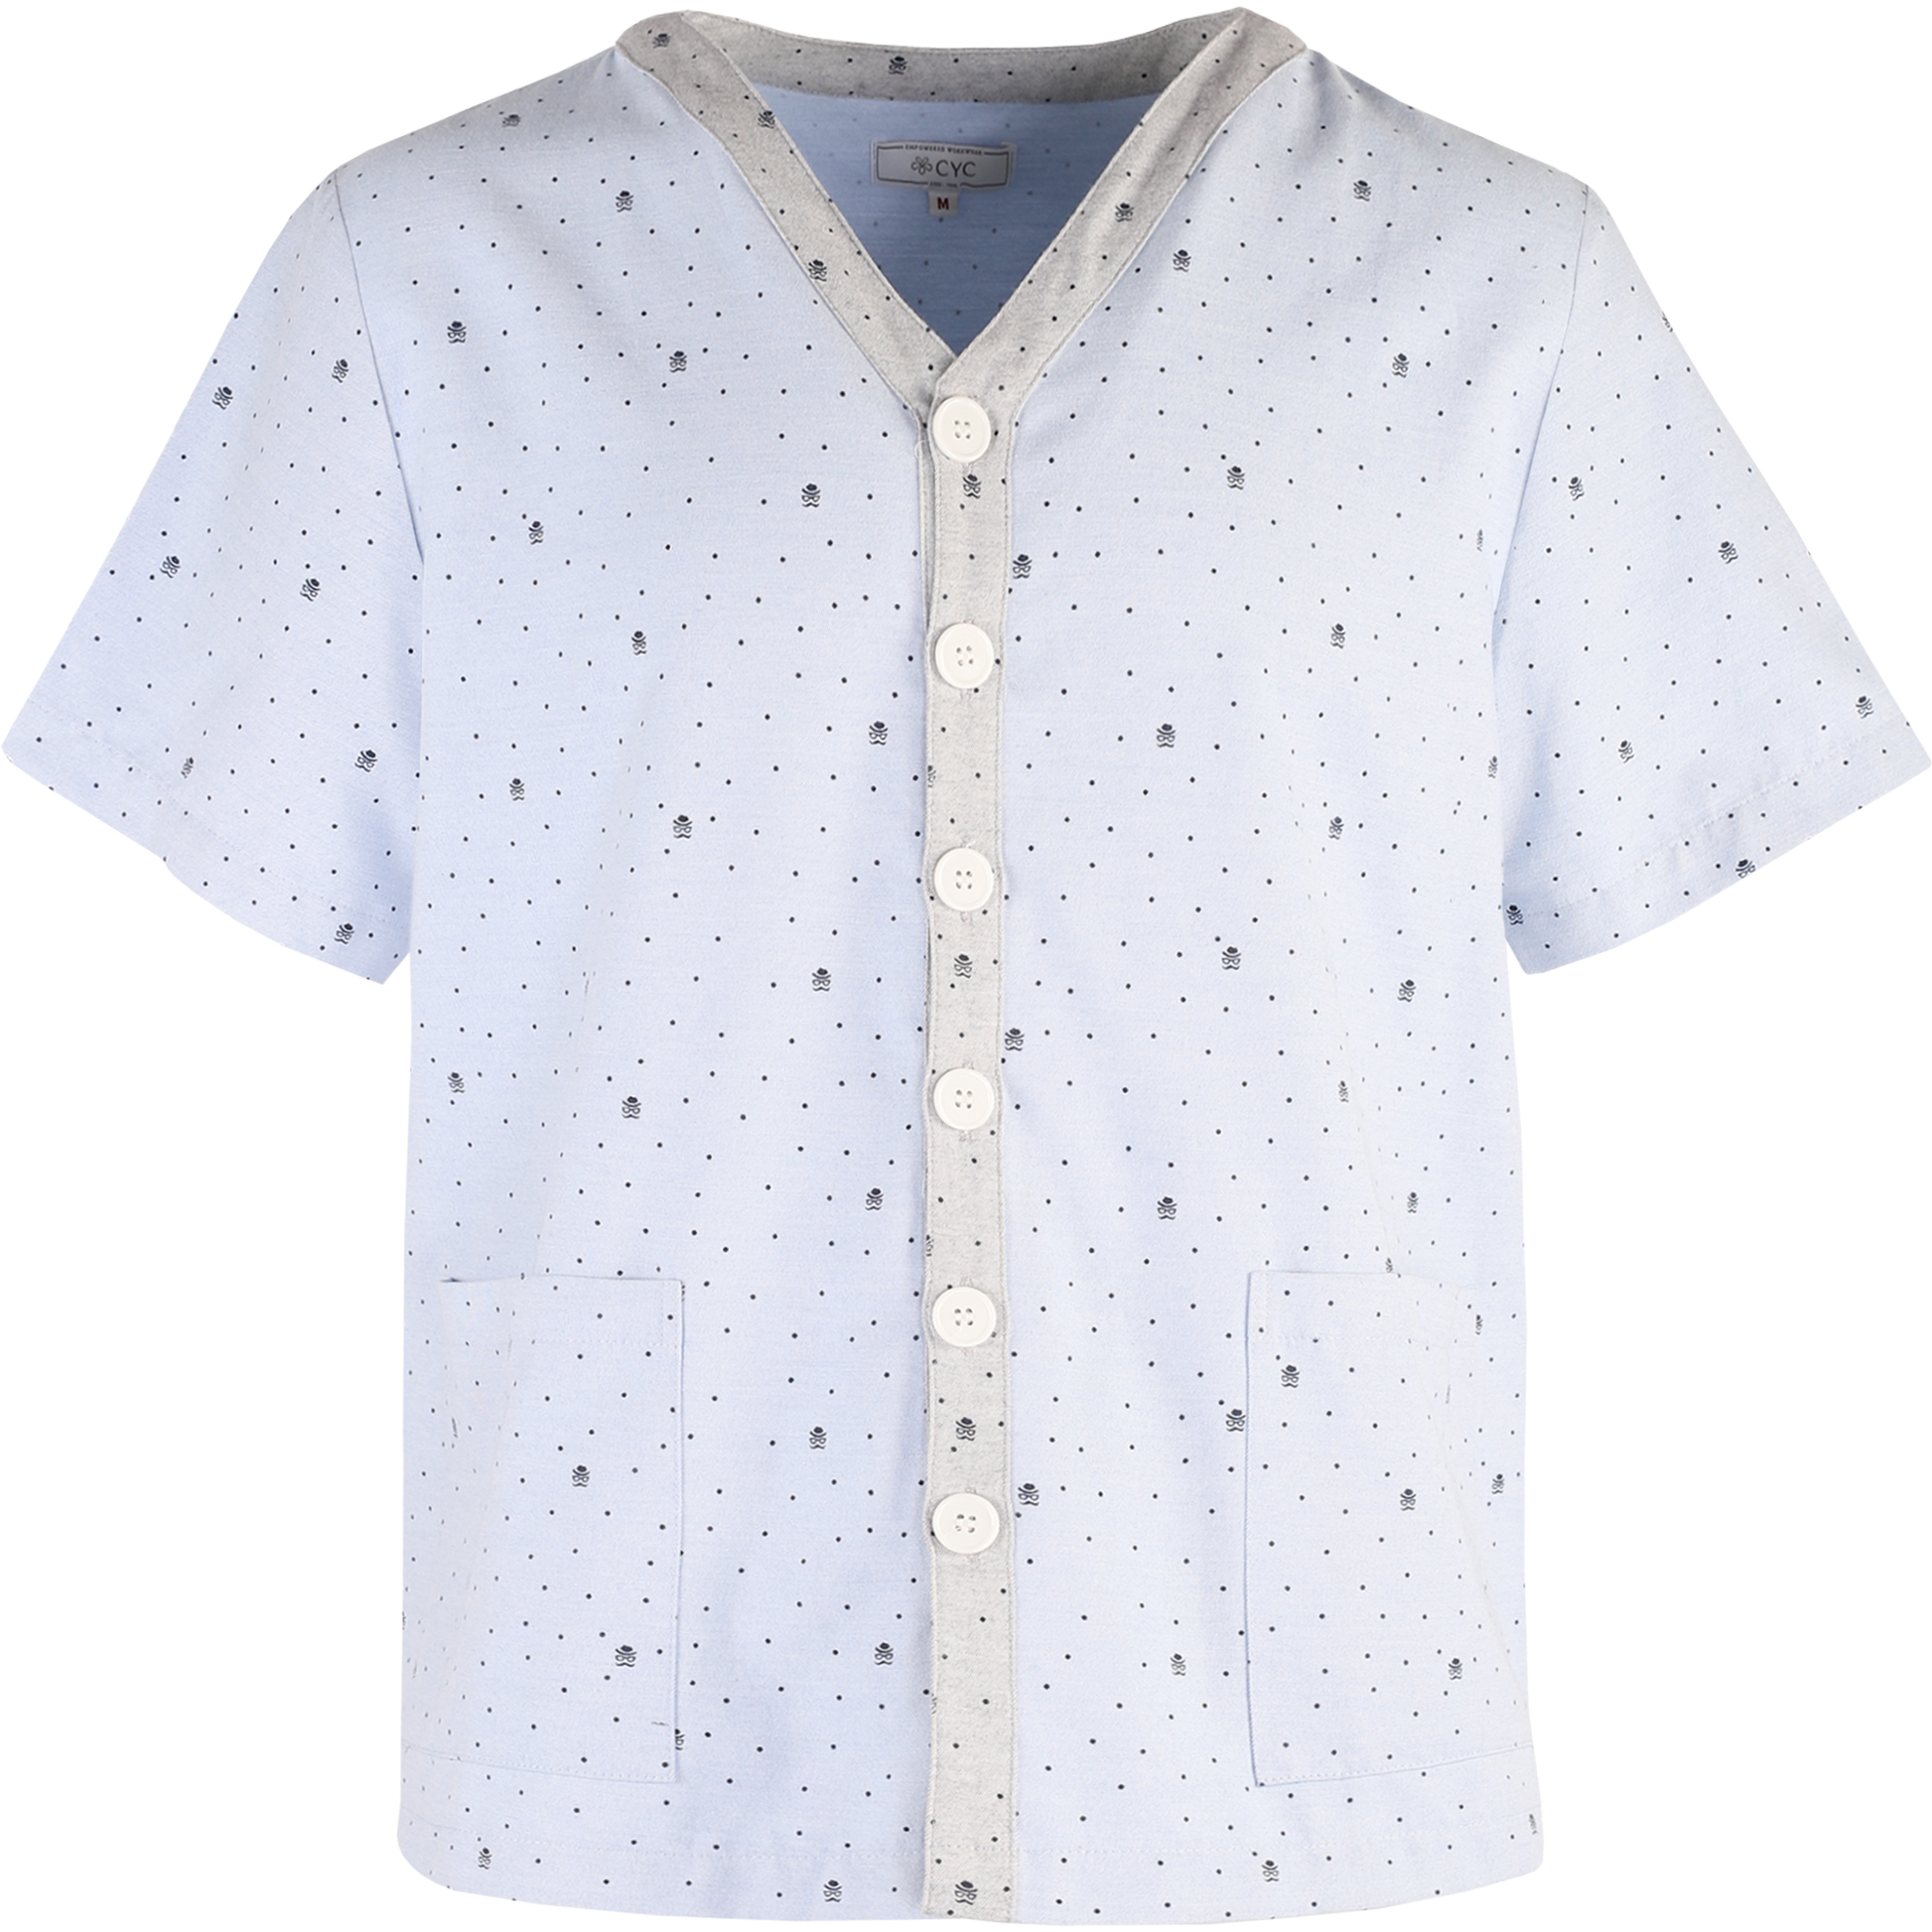 Blue Pyjama Top for Inpatients — Hospital & Nursing Home uniforms by CYC